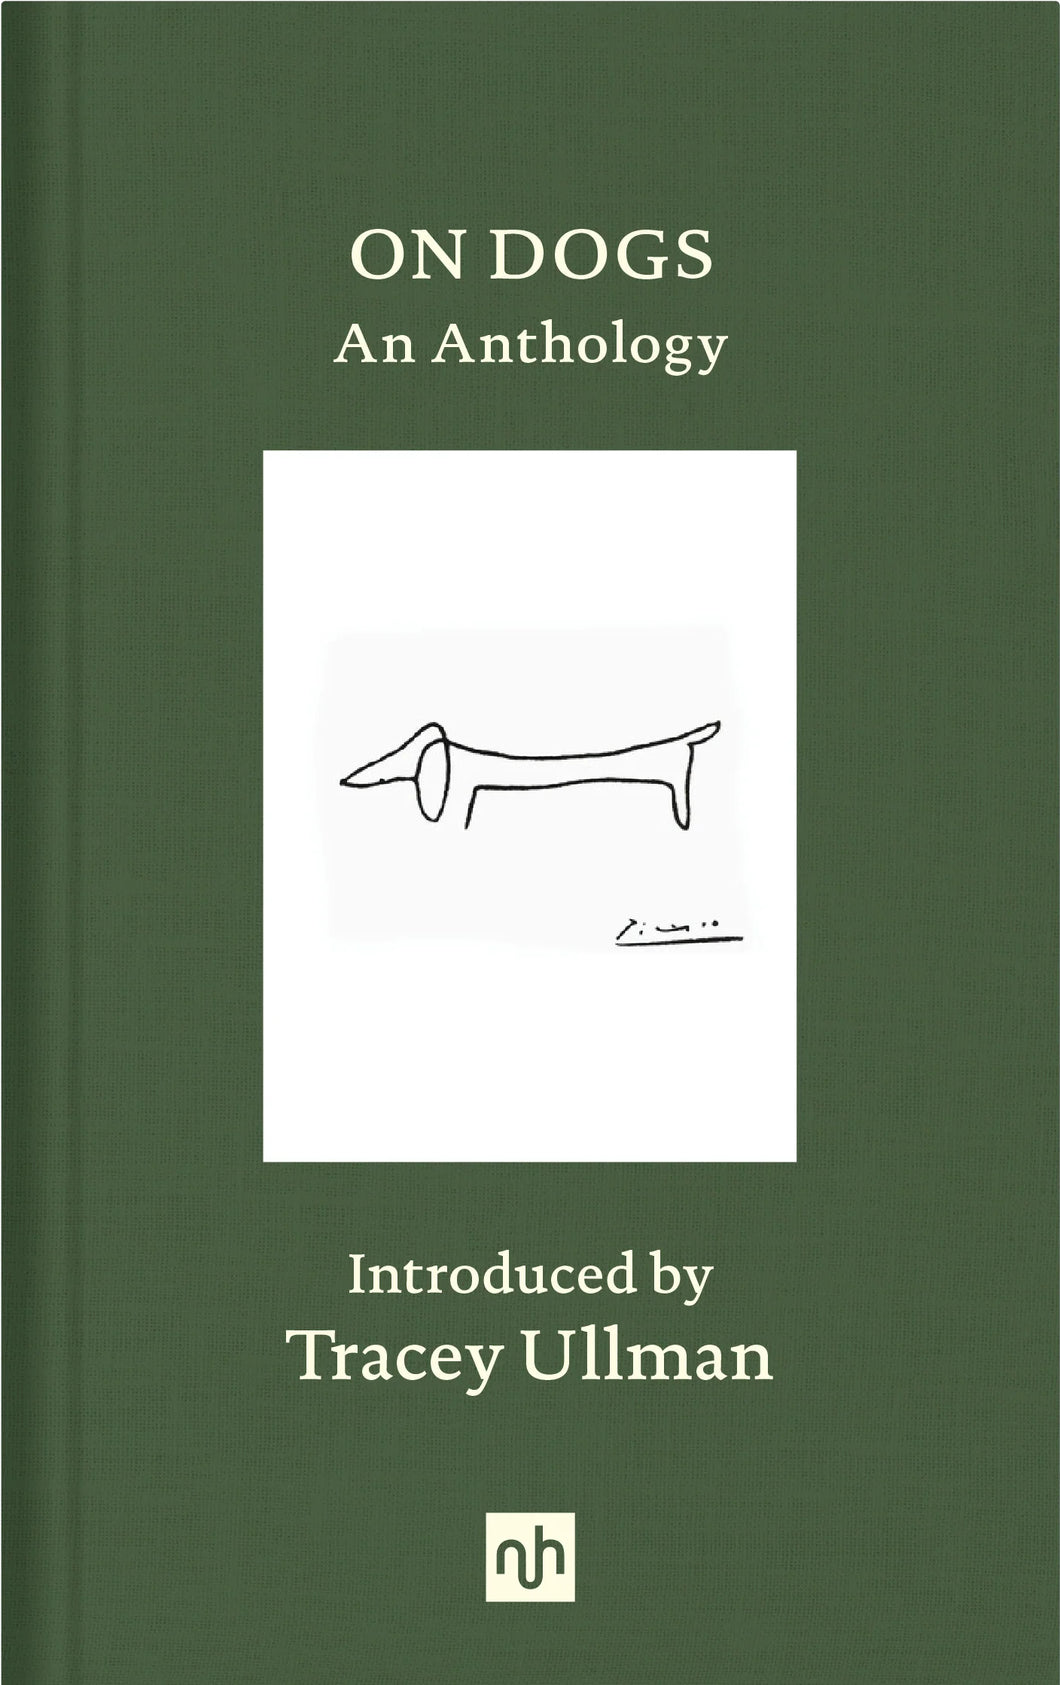 On Dogs: An Anthology ร้านหนังสือและสิ่งของ เป็นร้านหนังสือภาษาอังกฤษหายาก และร้านกาแฟ หรือ บุ๊คคาเฟ่ ตั้งอยู่สุขุมวิท กรุงเทพ